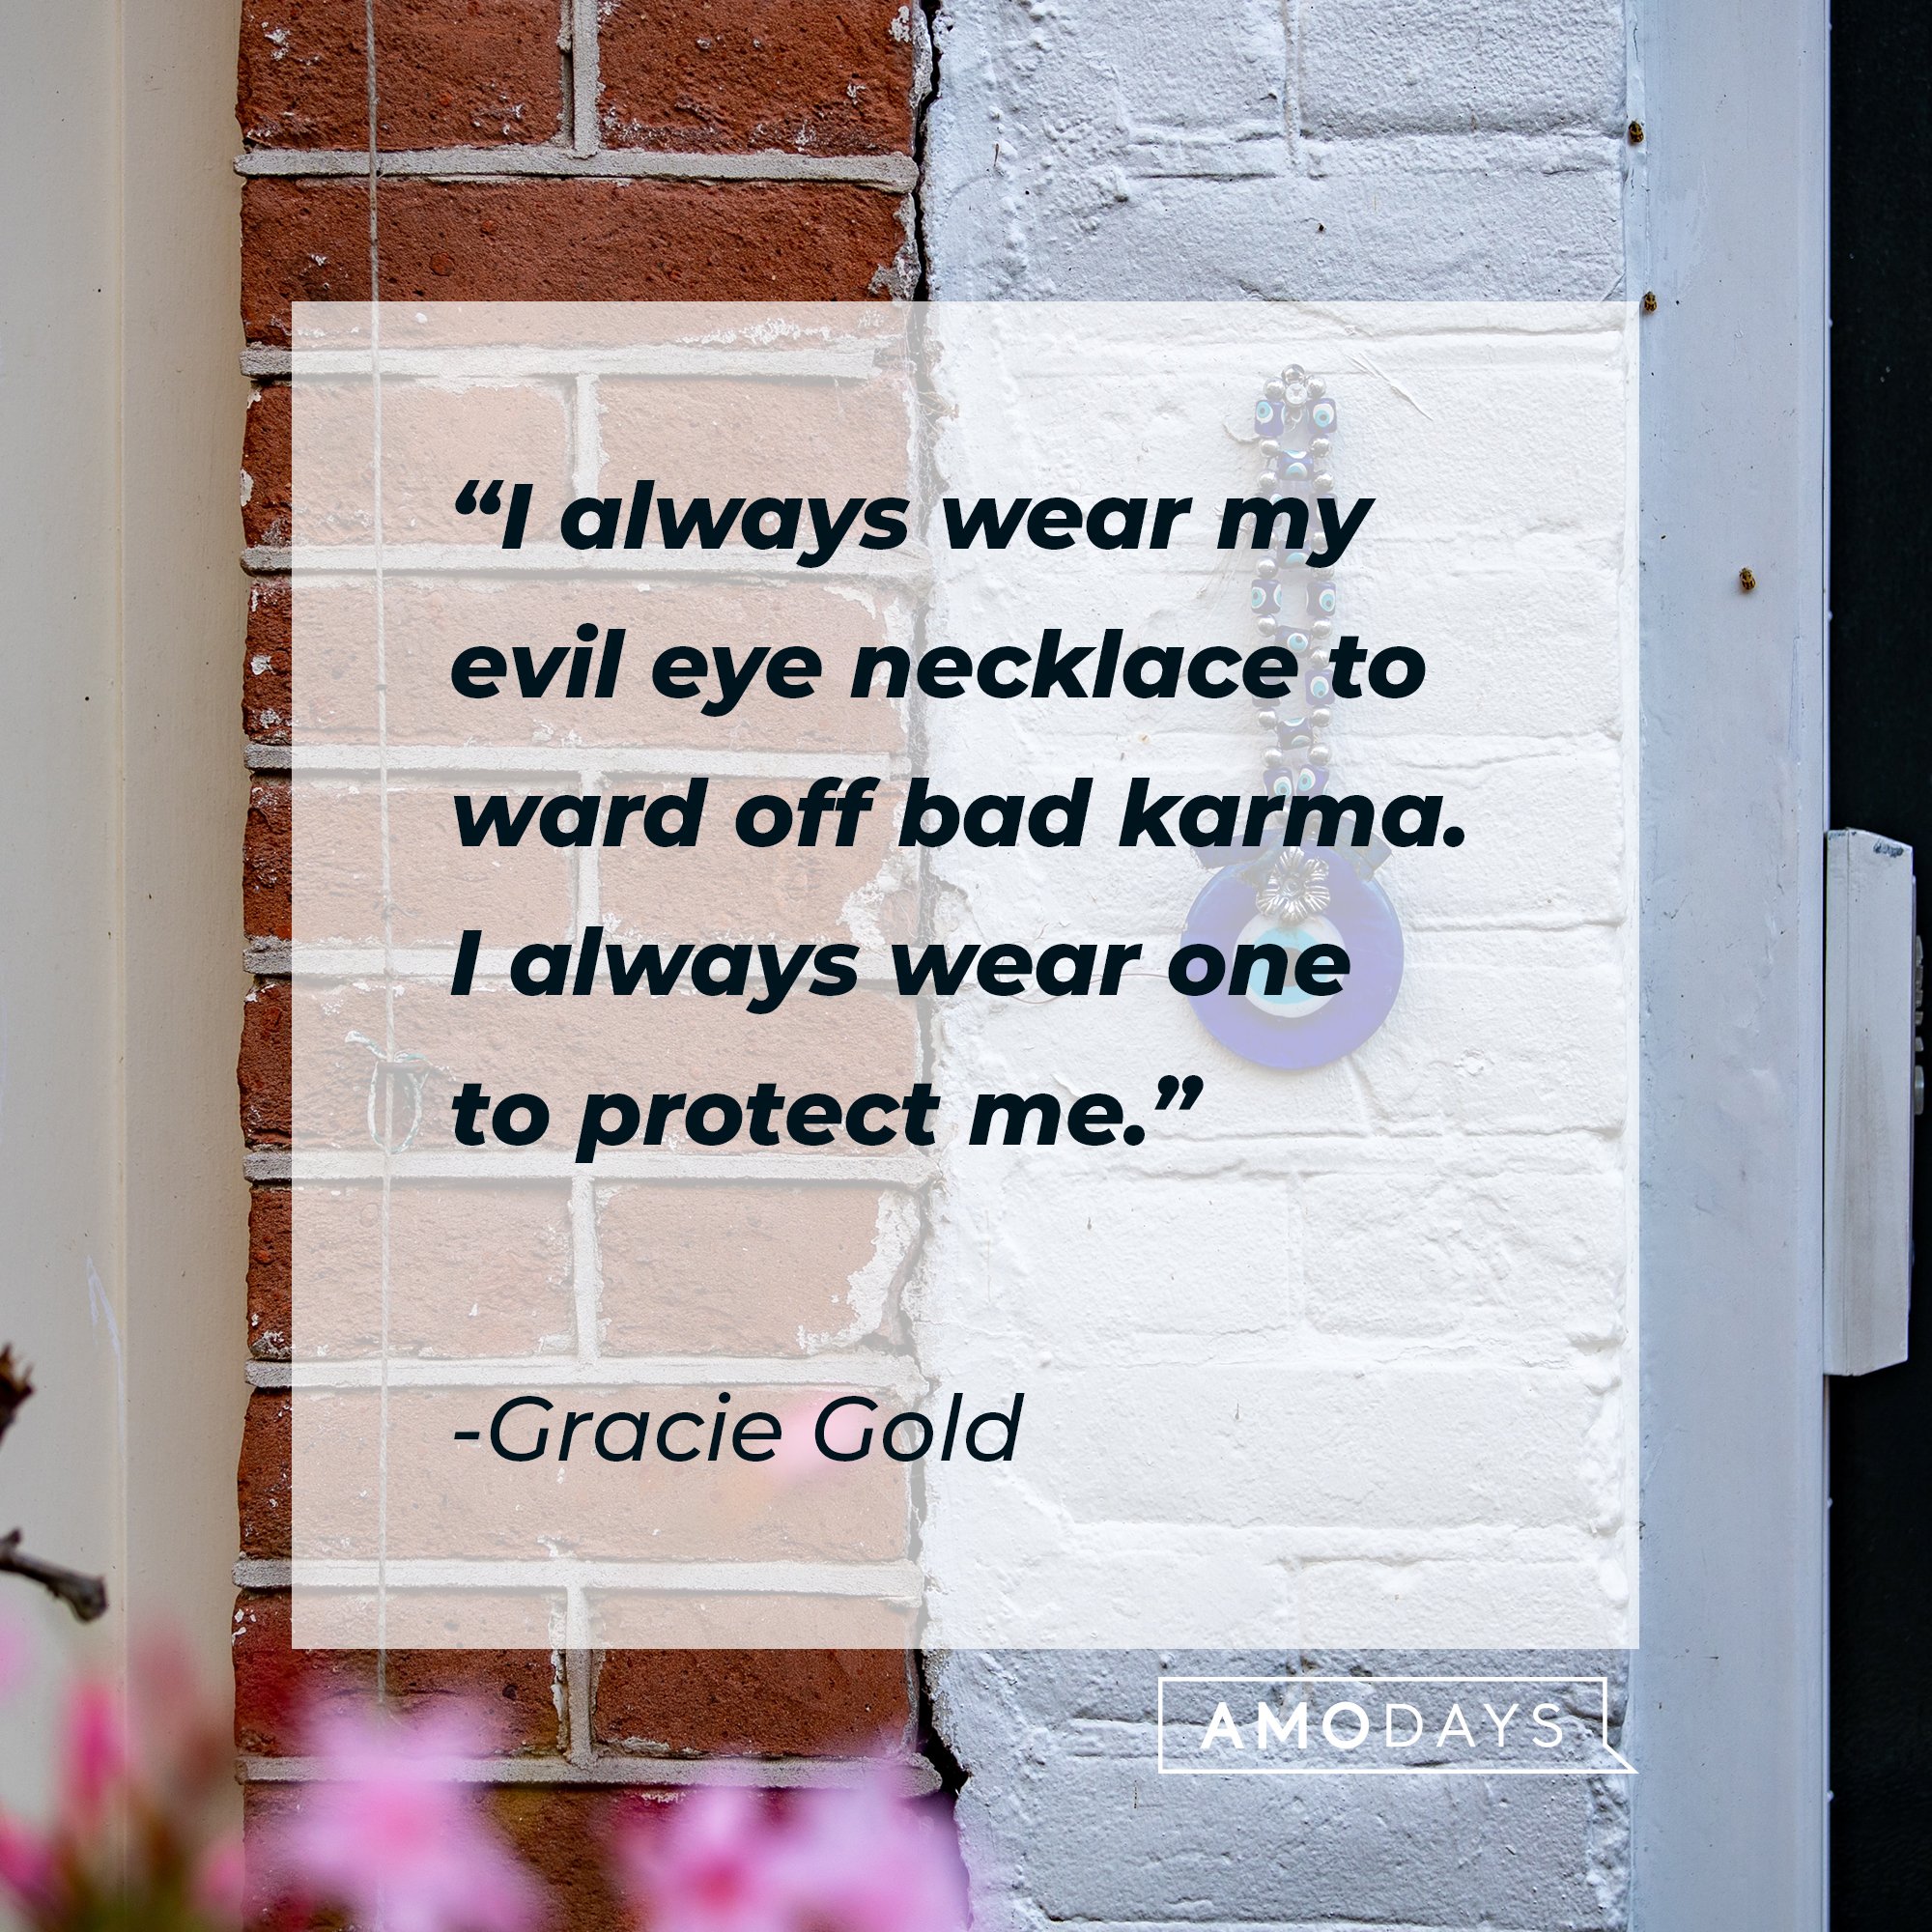 Gracie Gold’s quote: "I always wear my evil eye necklace to ward off bad karma. I always wear one to protect me." | Image: AmoDays